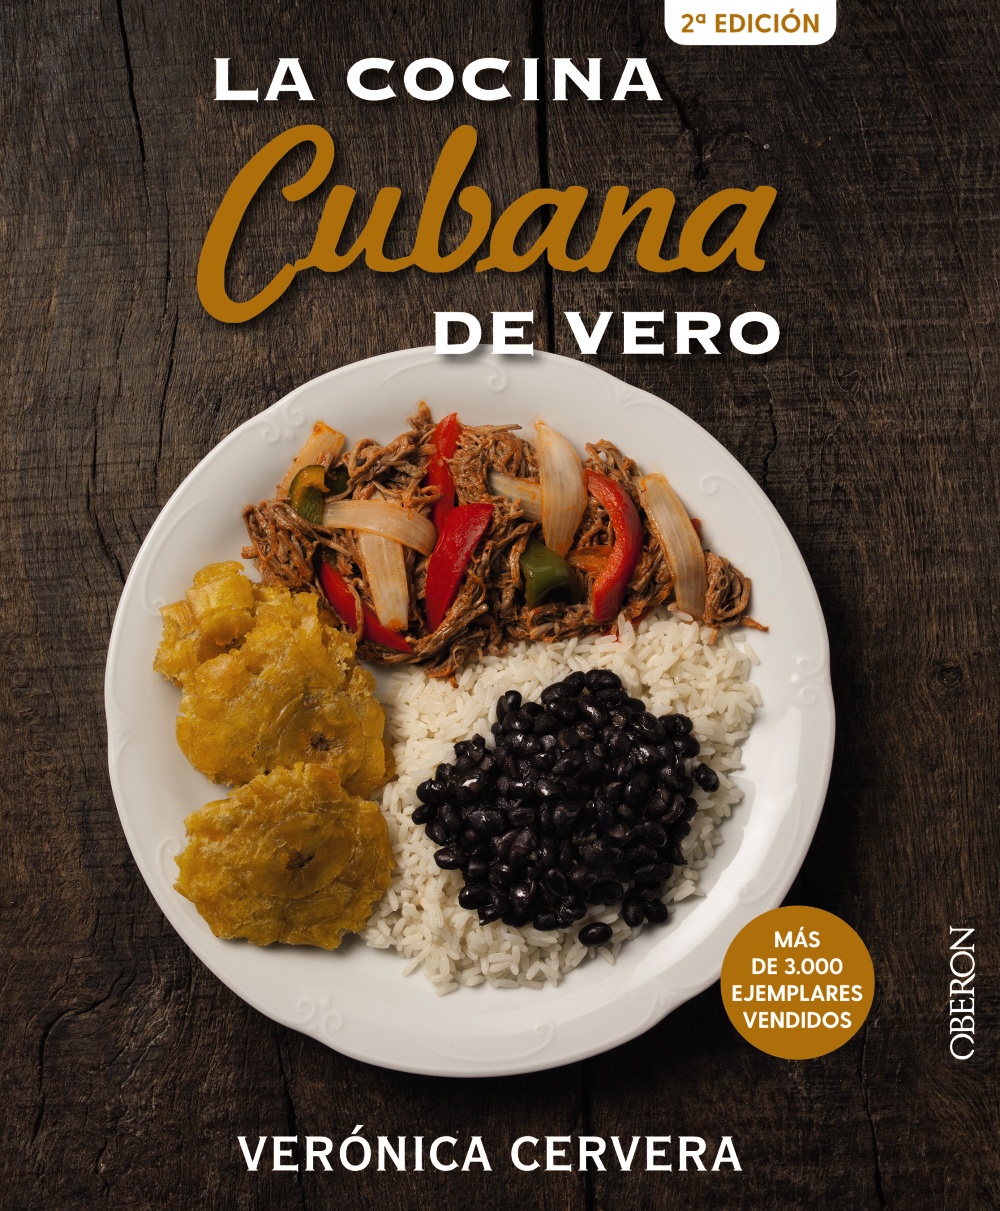 La cocina cubana de Vero